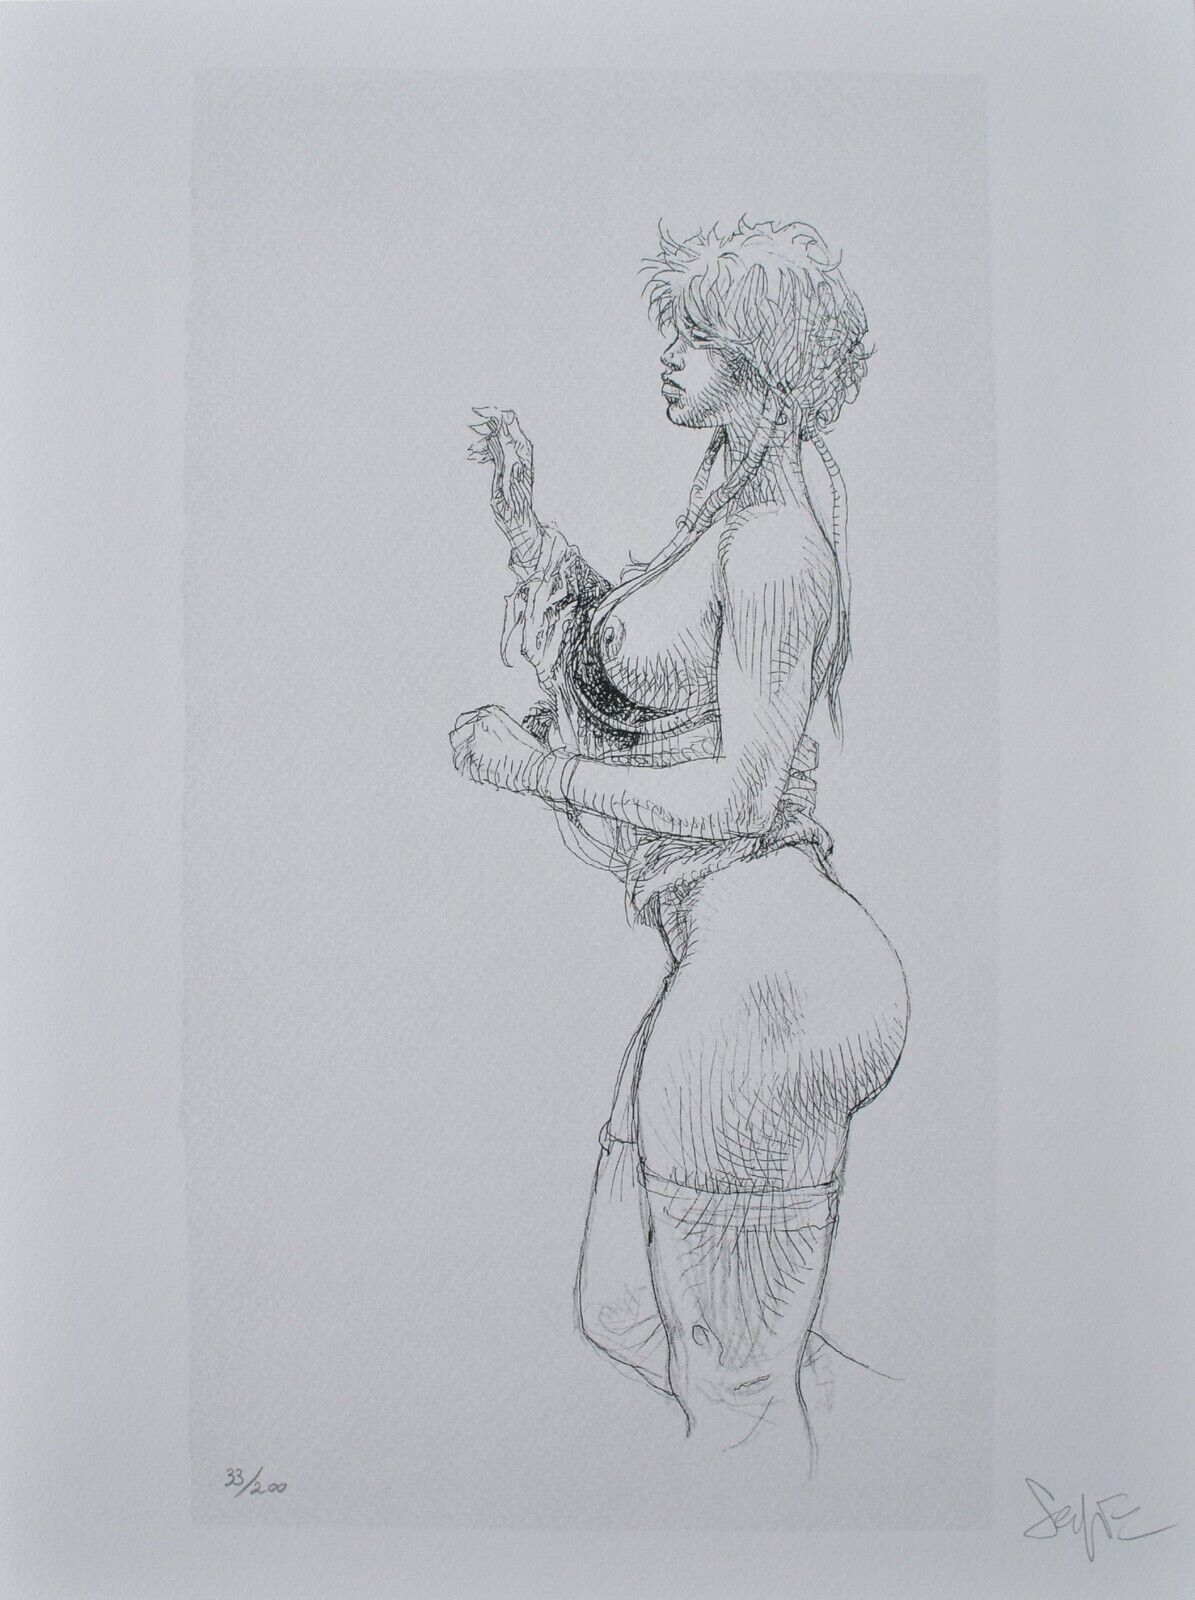 Paolo Serpieri: Warrior, Print Offset Erotic Signed, 200ex, 2009